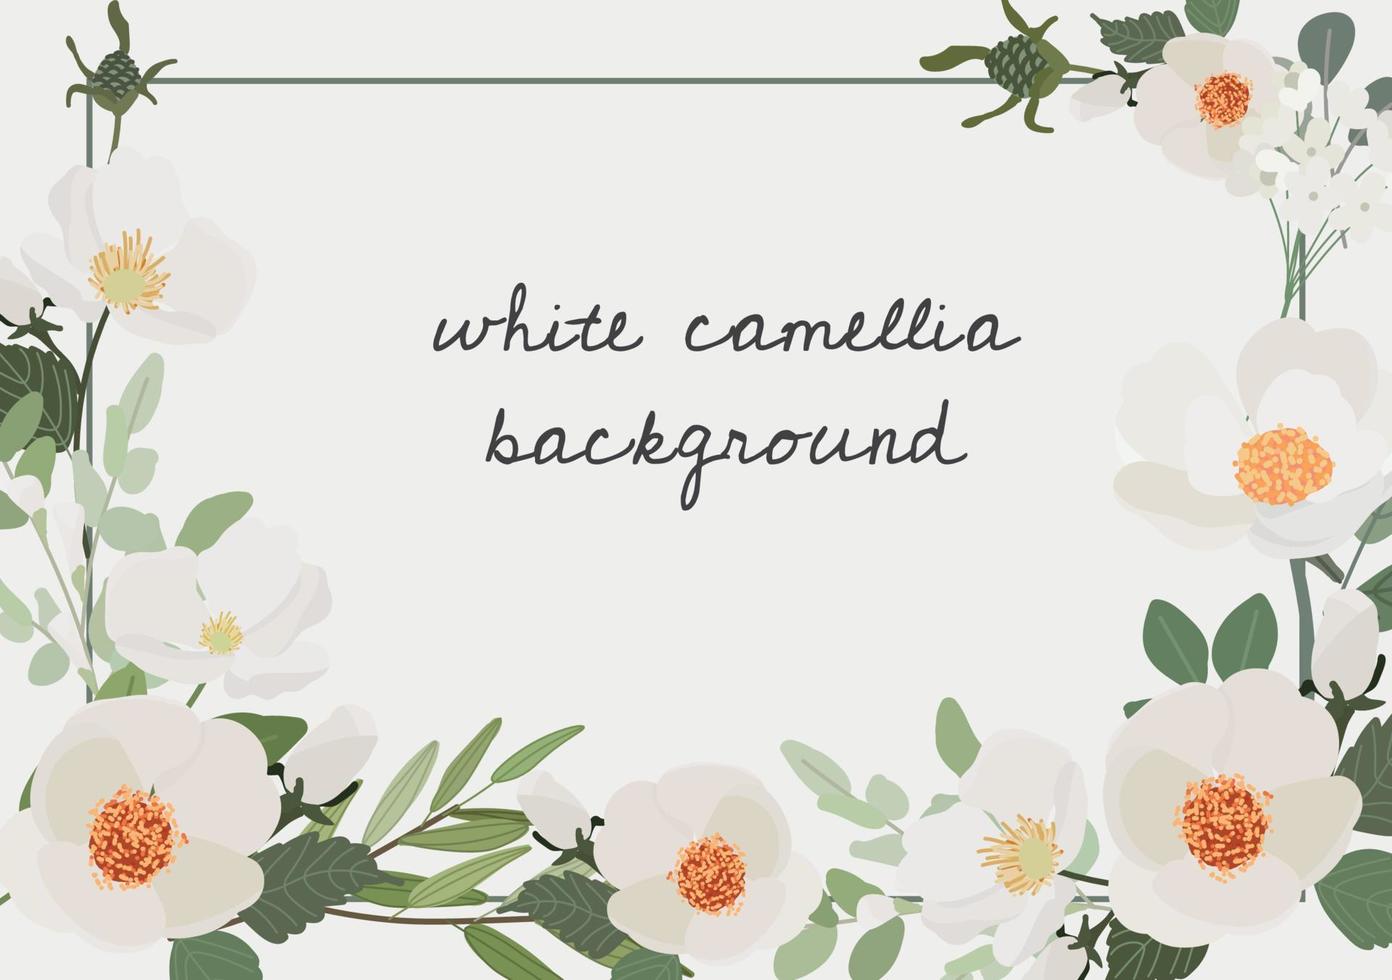 white camellia flower bouquet wreath frame background flat stylewhite camellia flower bouquet wreath frame background flat style vector